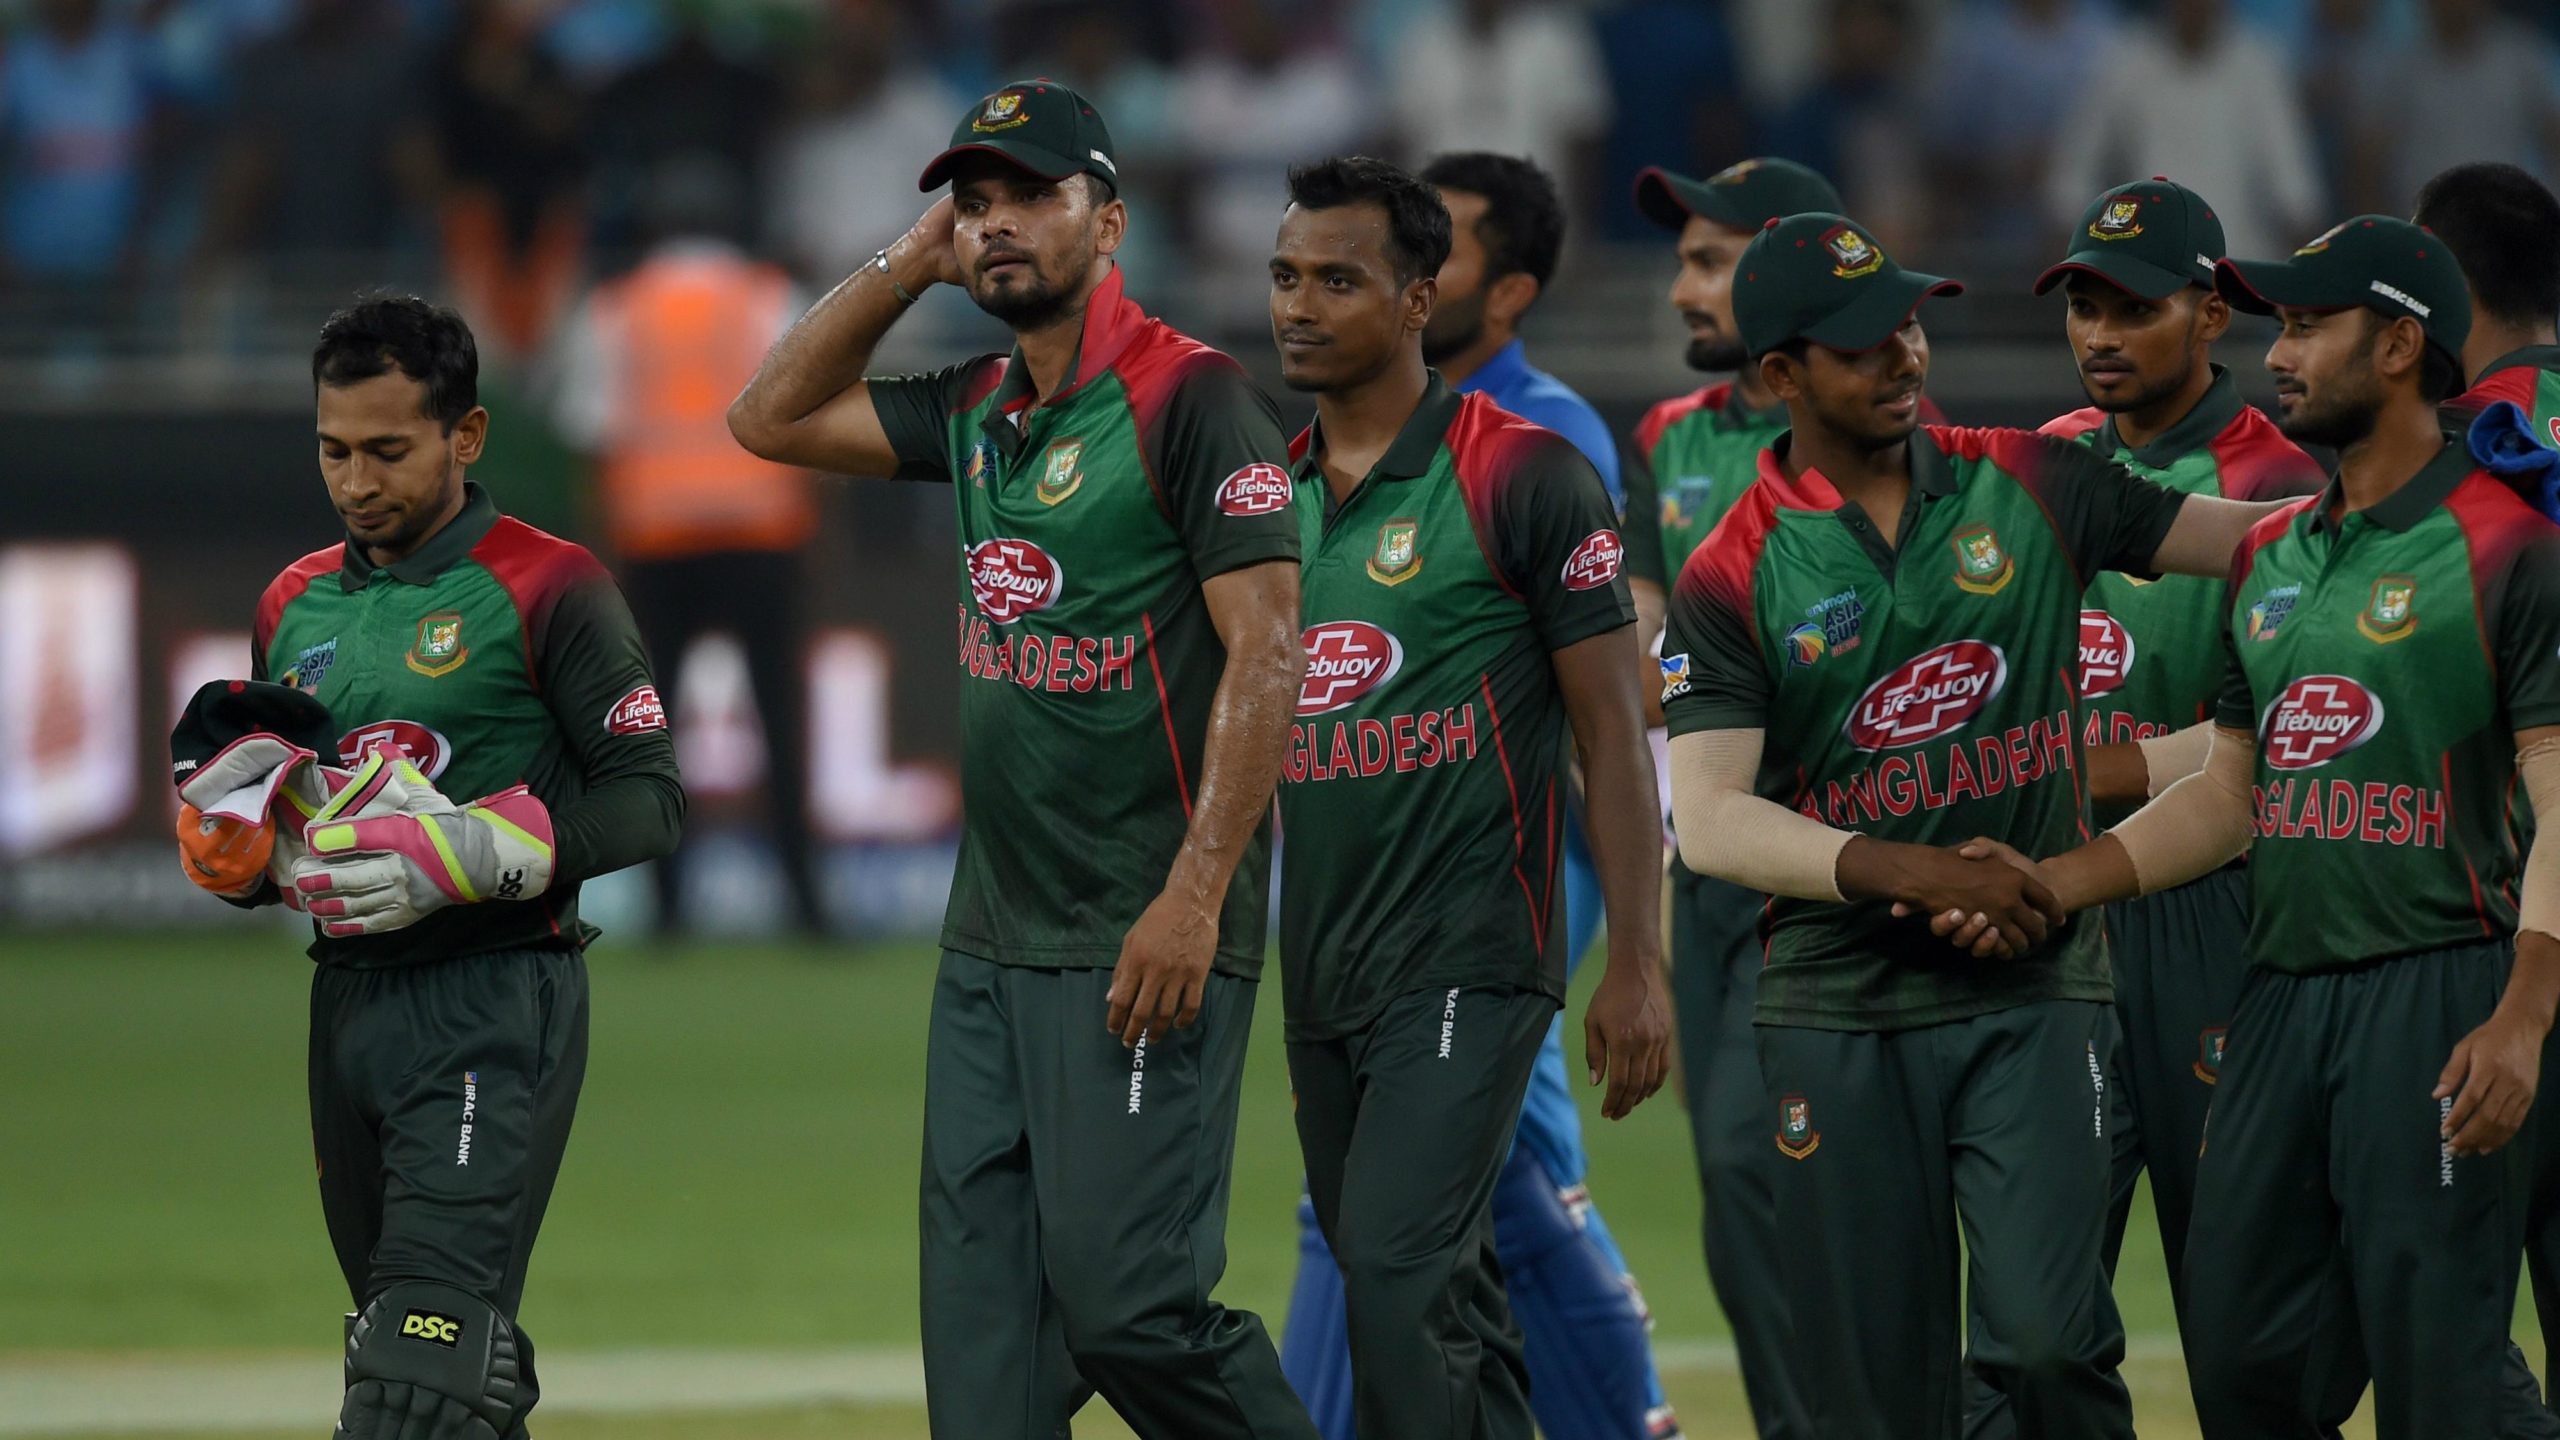 Bangladesh team to tour Pakistan, PCB will host three T20 matches